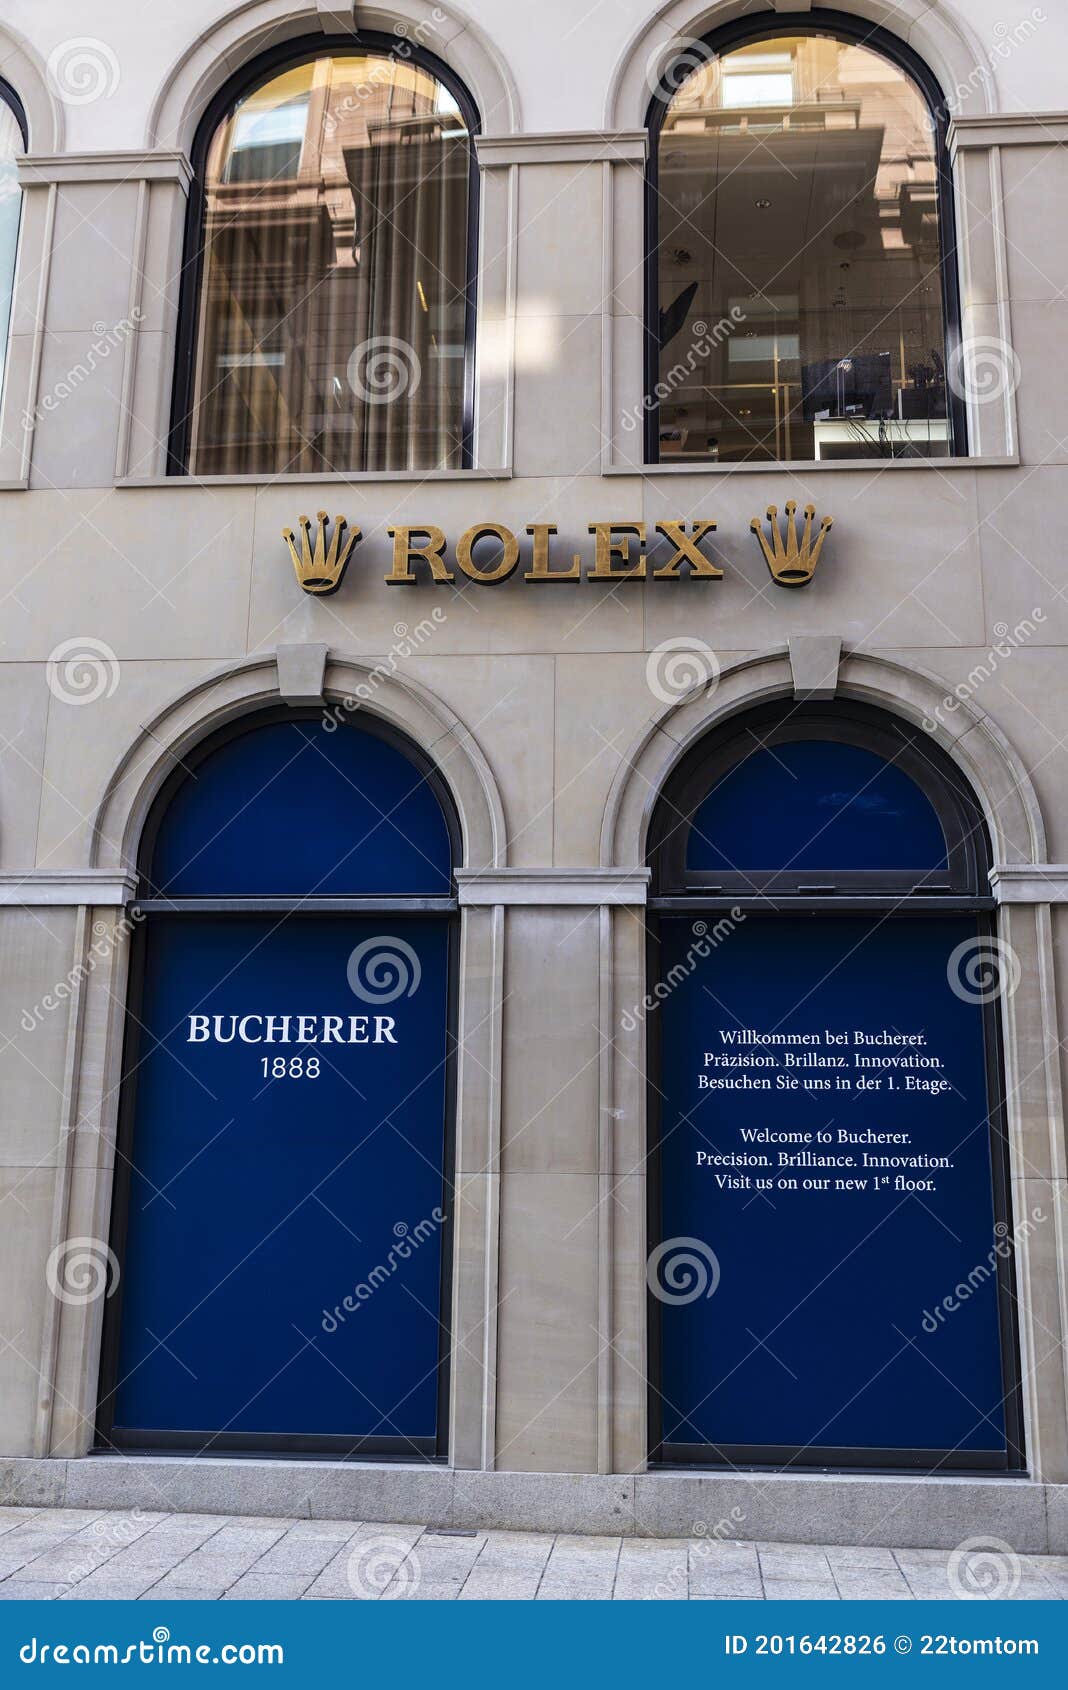 Rolex Luxury Watch Store in Hamburg, Editorial Photo - Image of gift, brand: 201642826